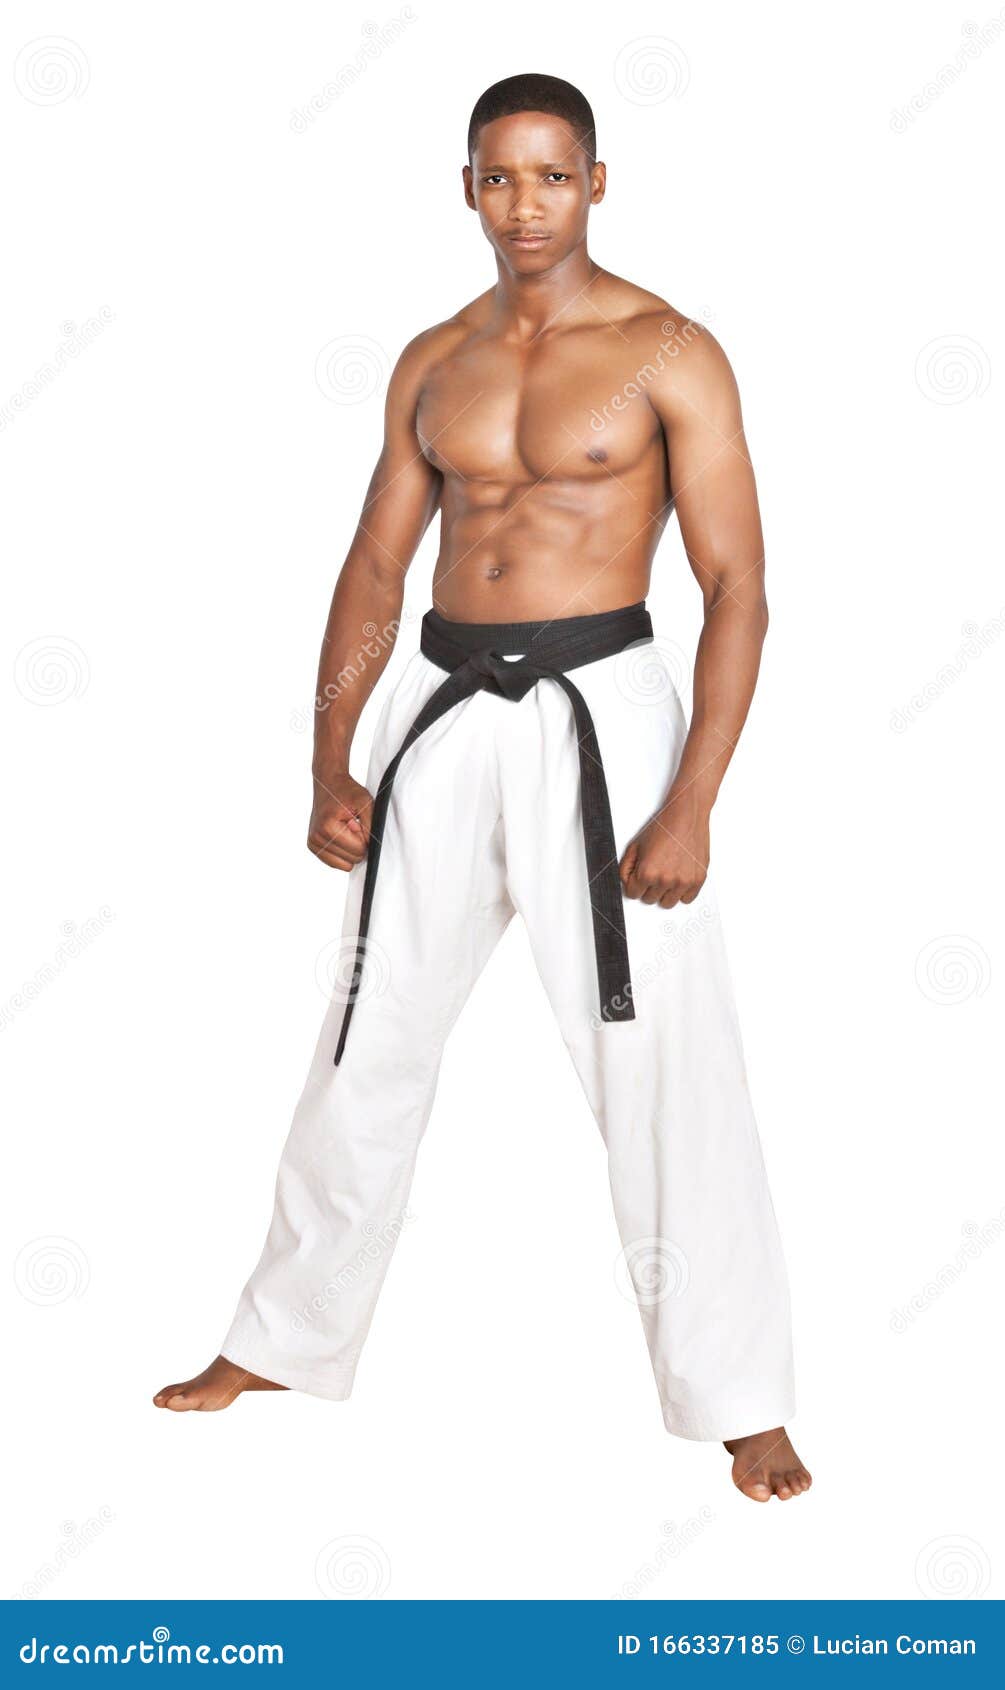 Karate african stock image. Image of mixed, belt, kick - 166337185